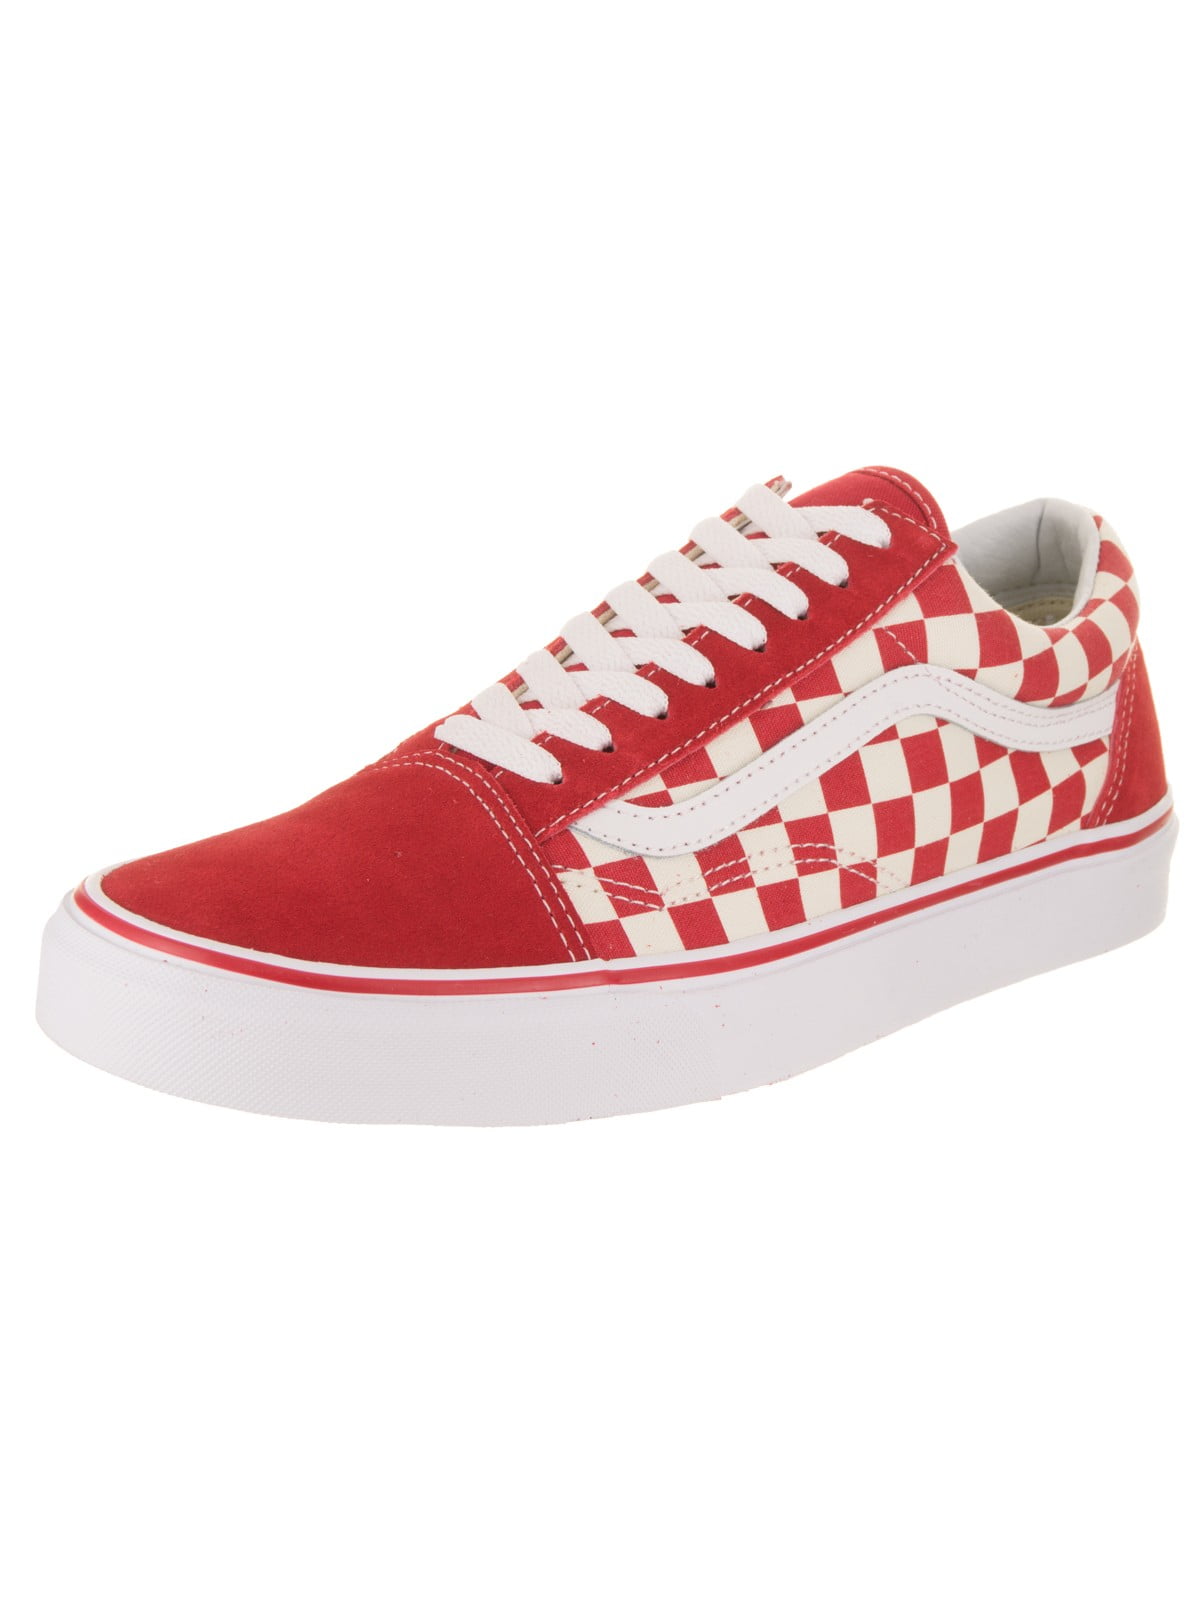 staking karbonade pop Vans VN-0A38G1POT: Old Skool Unisex (Primary Checkered) Red/White Sneakers  (9 D(M) US Mens / 10.5 B(M) US Womens) - Walmart.com